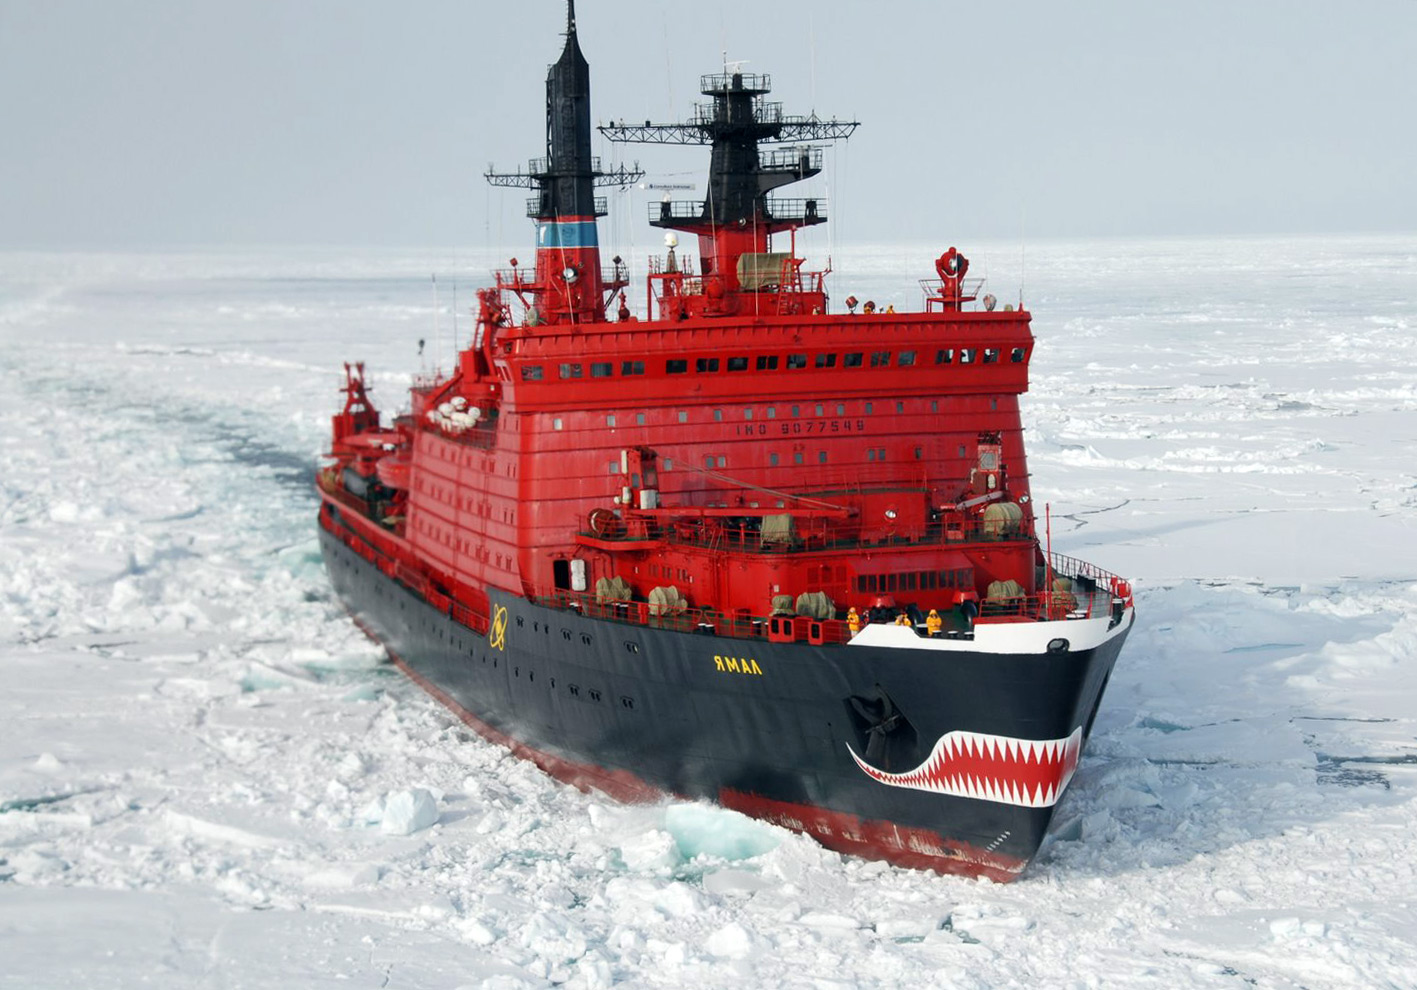 Yamal, a nuclear powered icebreaker